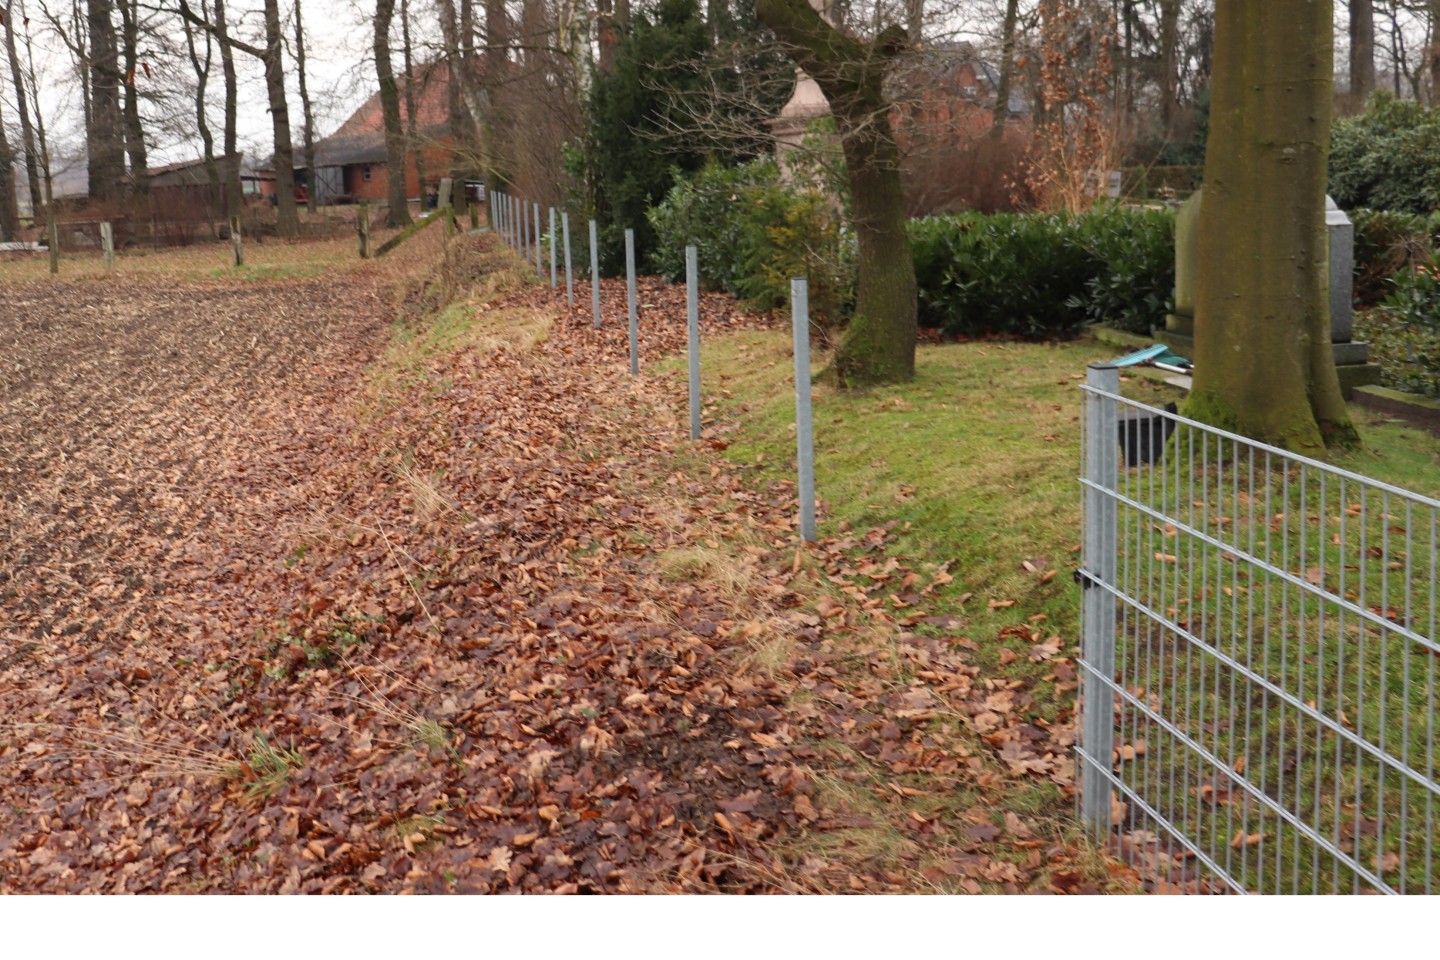 POL-PB: 14 Zaunelemente vom Friedhof gestohlen Delbrück (ots)